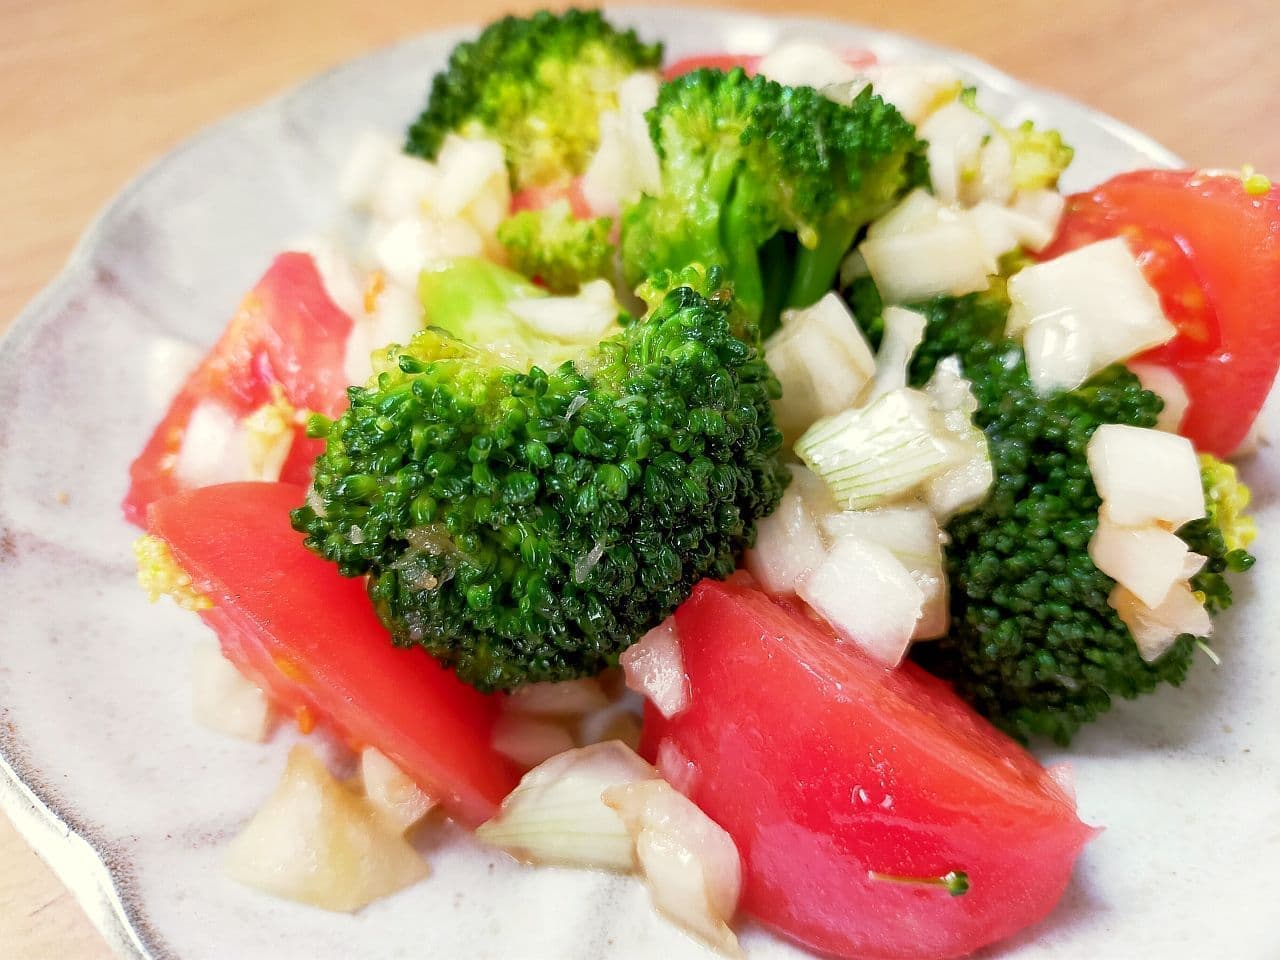 "Japanese-style broccoli marinade" recipe